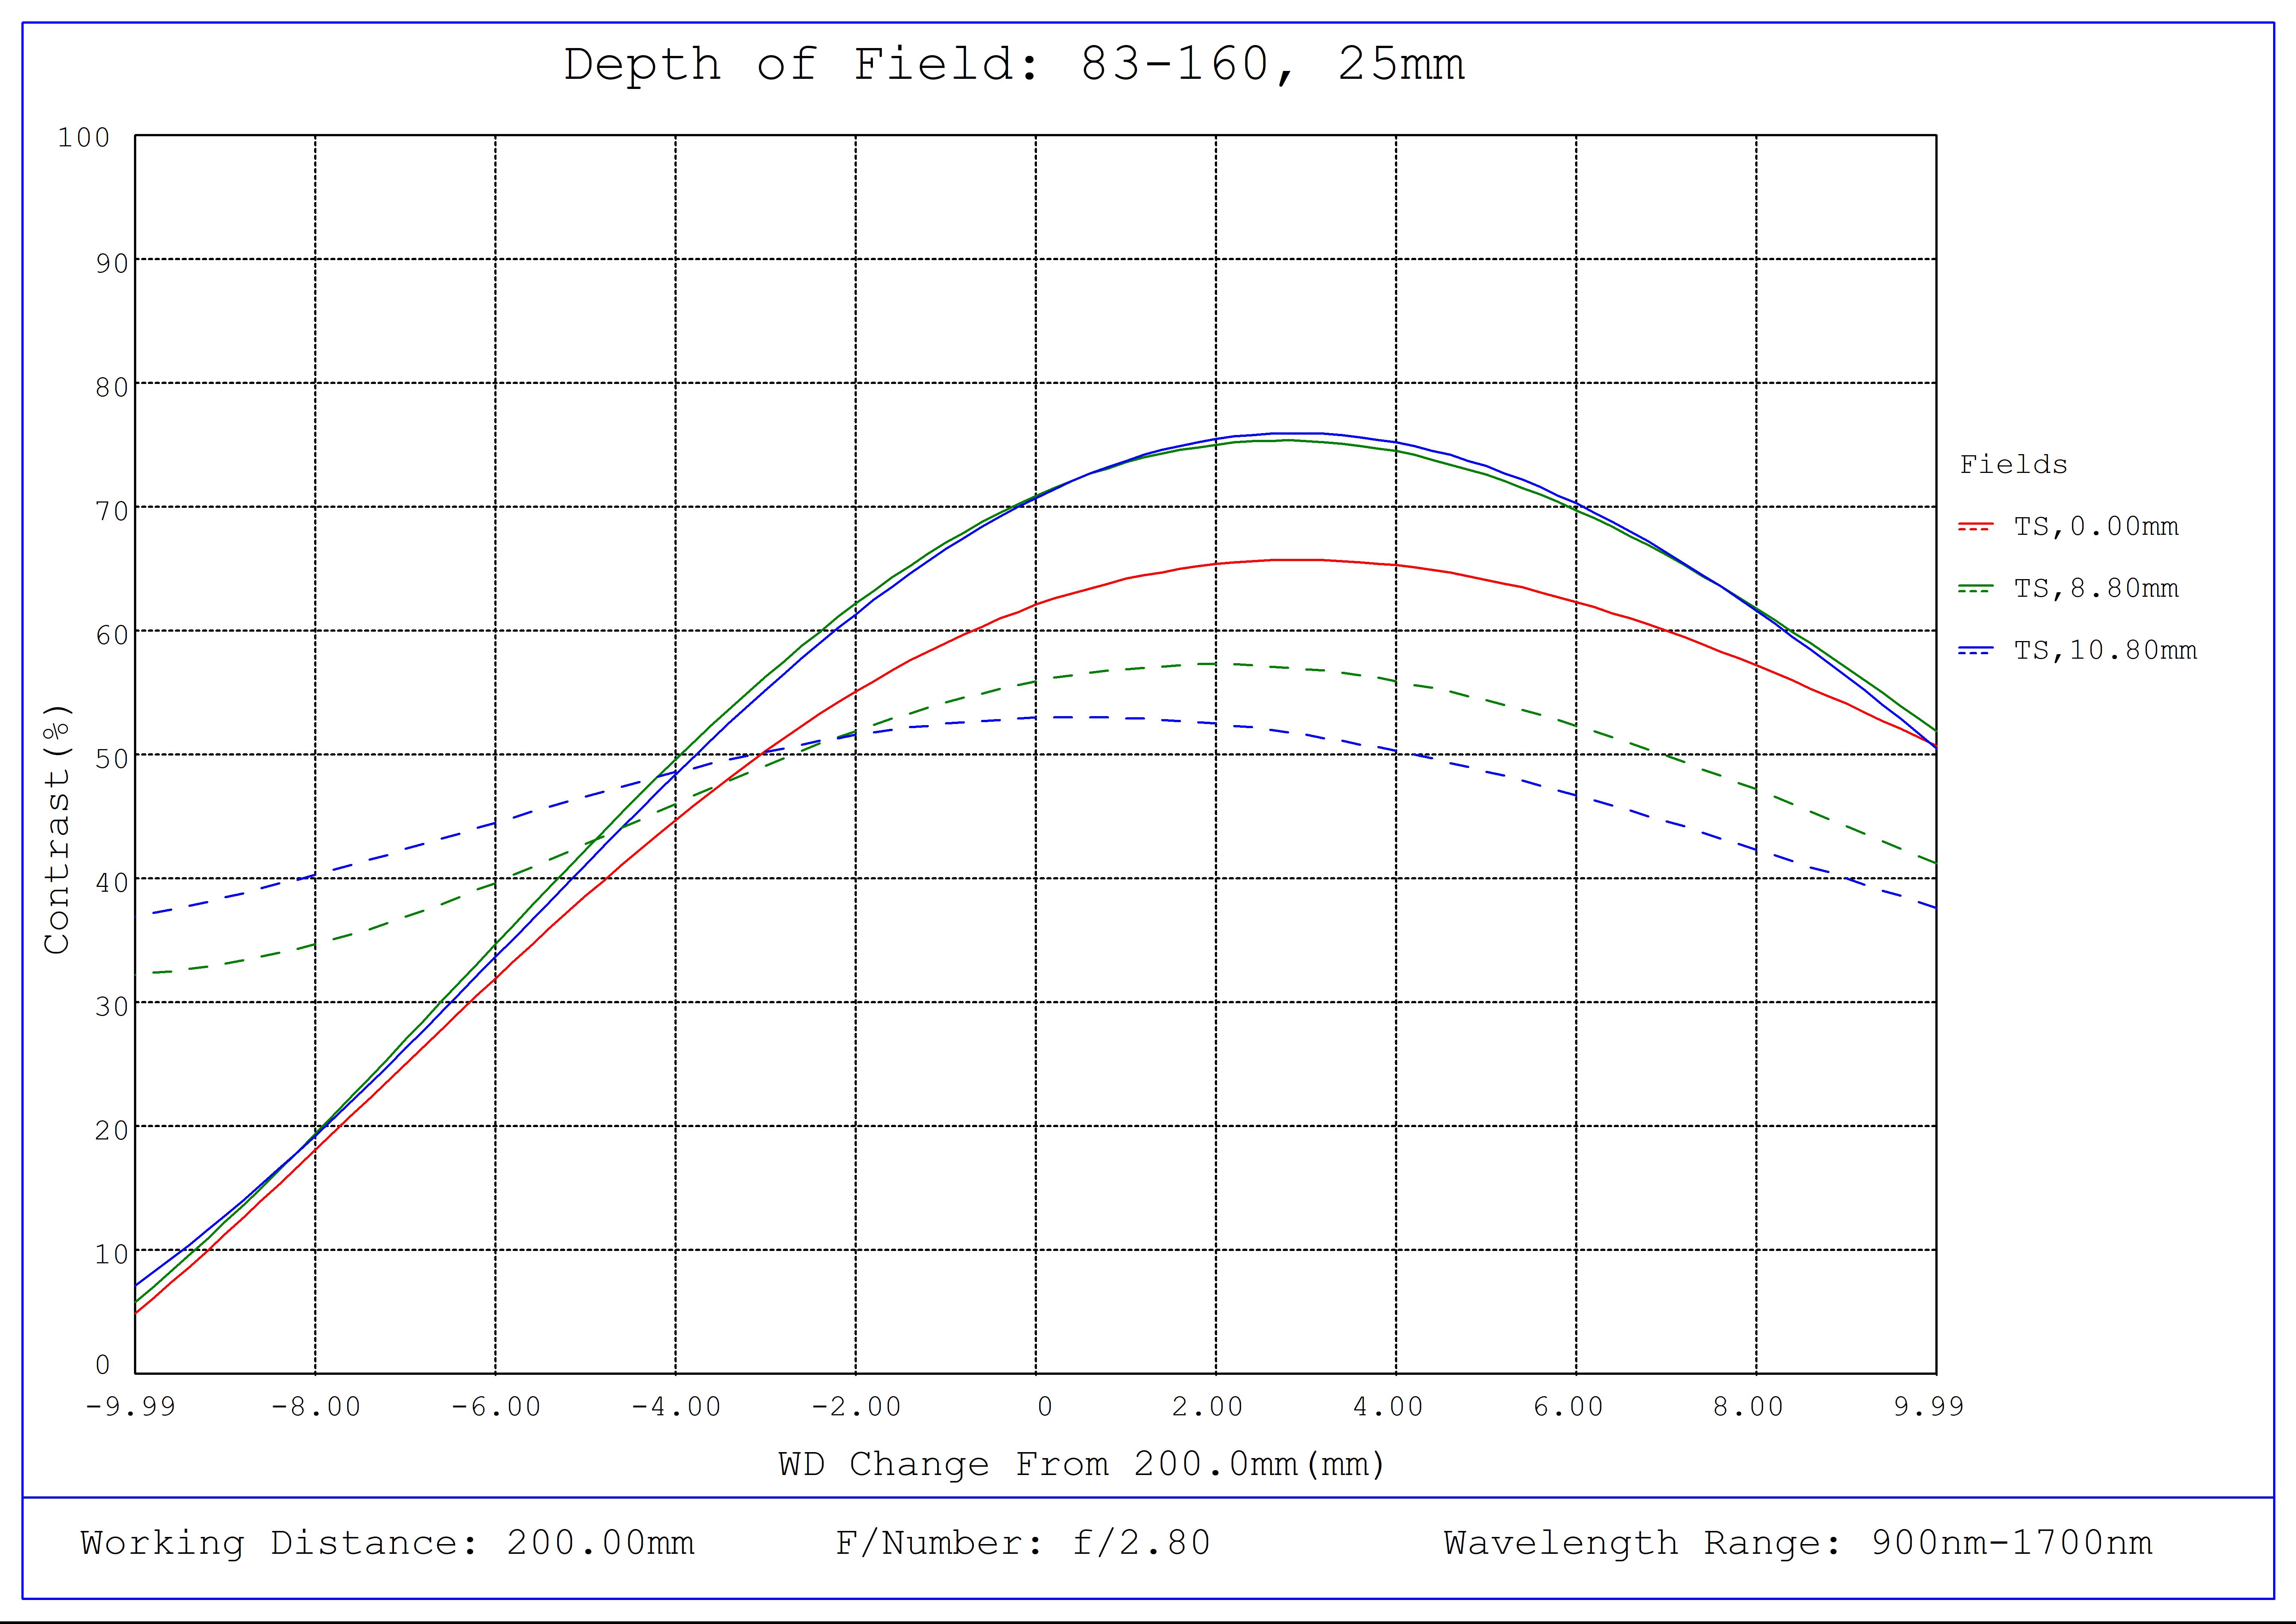 #83-160, 25mm SWIR Series Fixed Focal Length Lens, Depth of Field Plot, 200mm Working Distance, f2.8